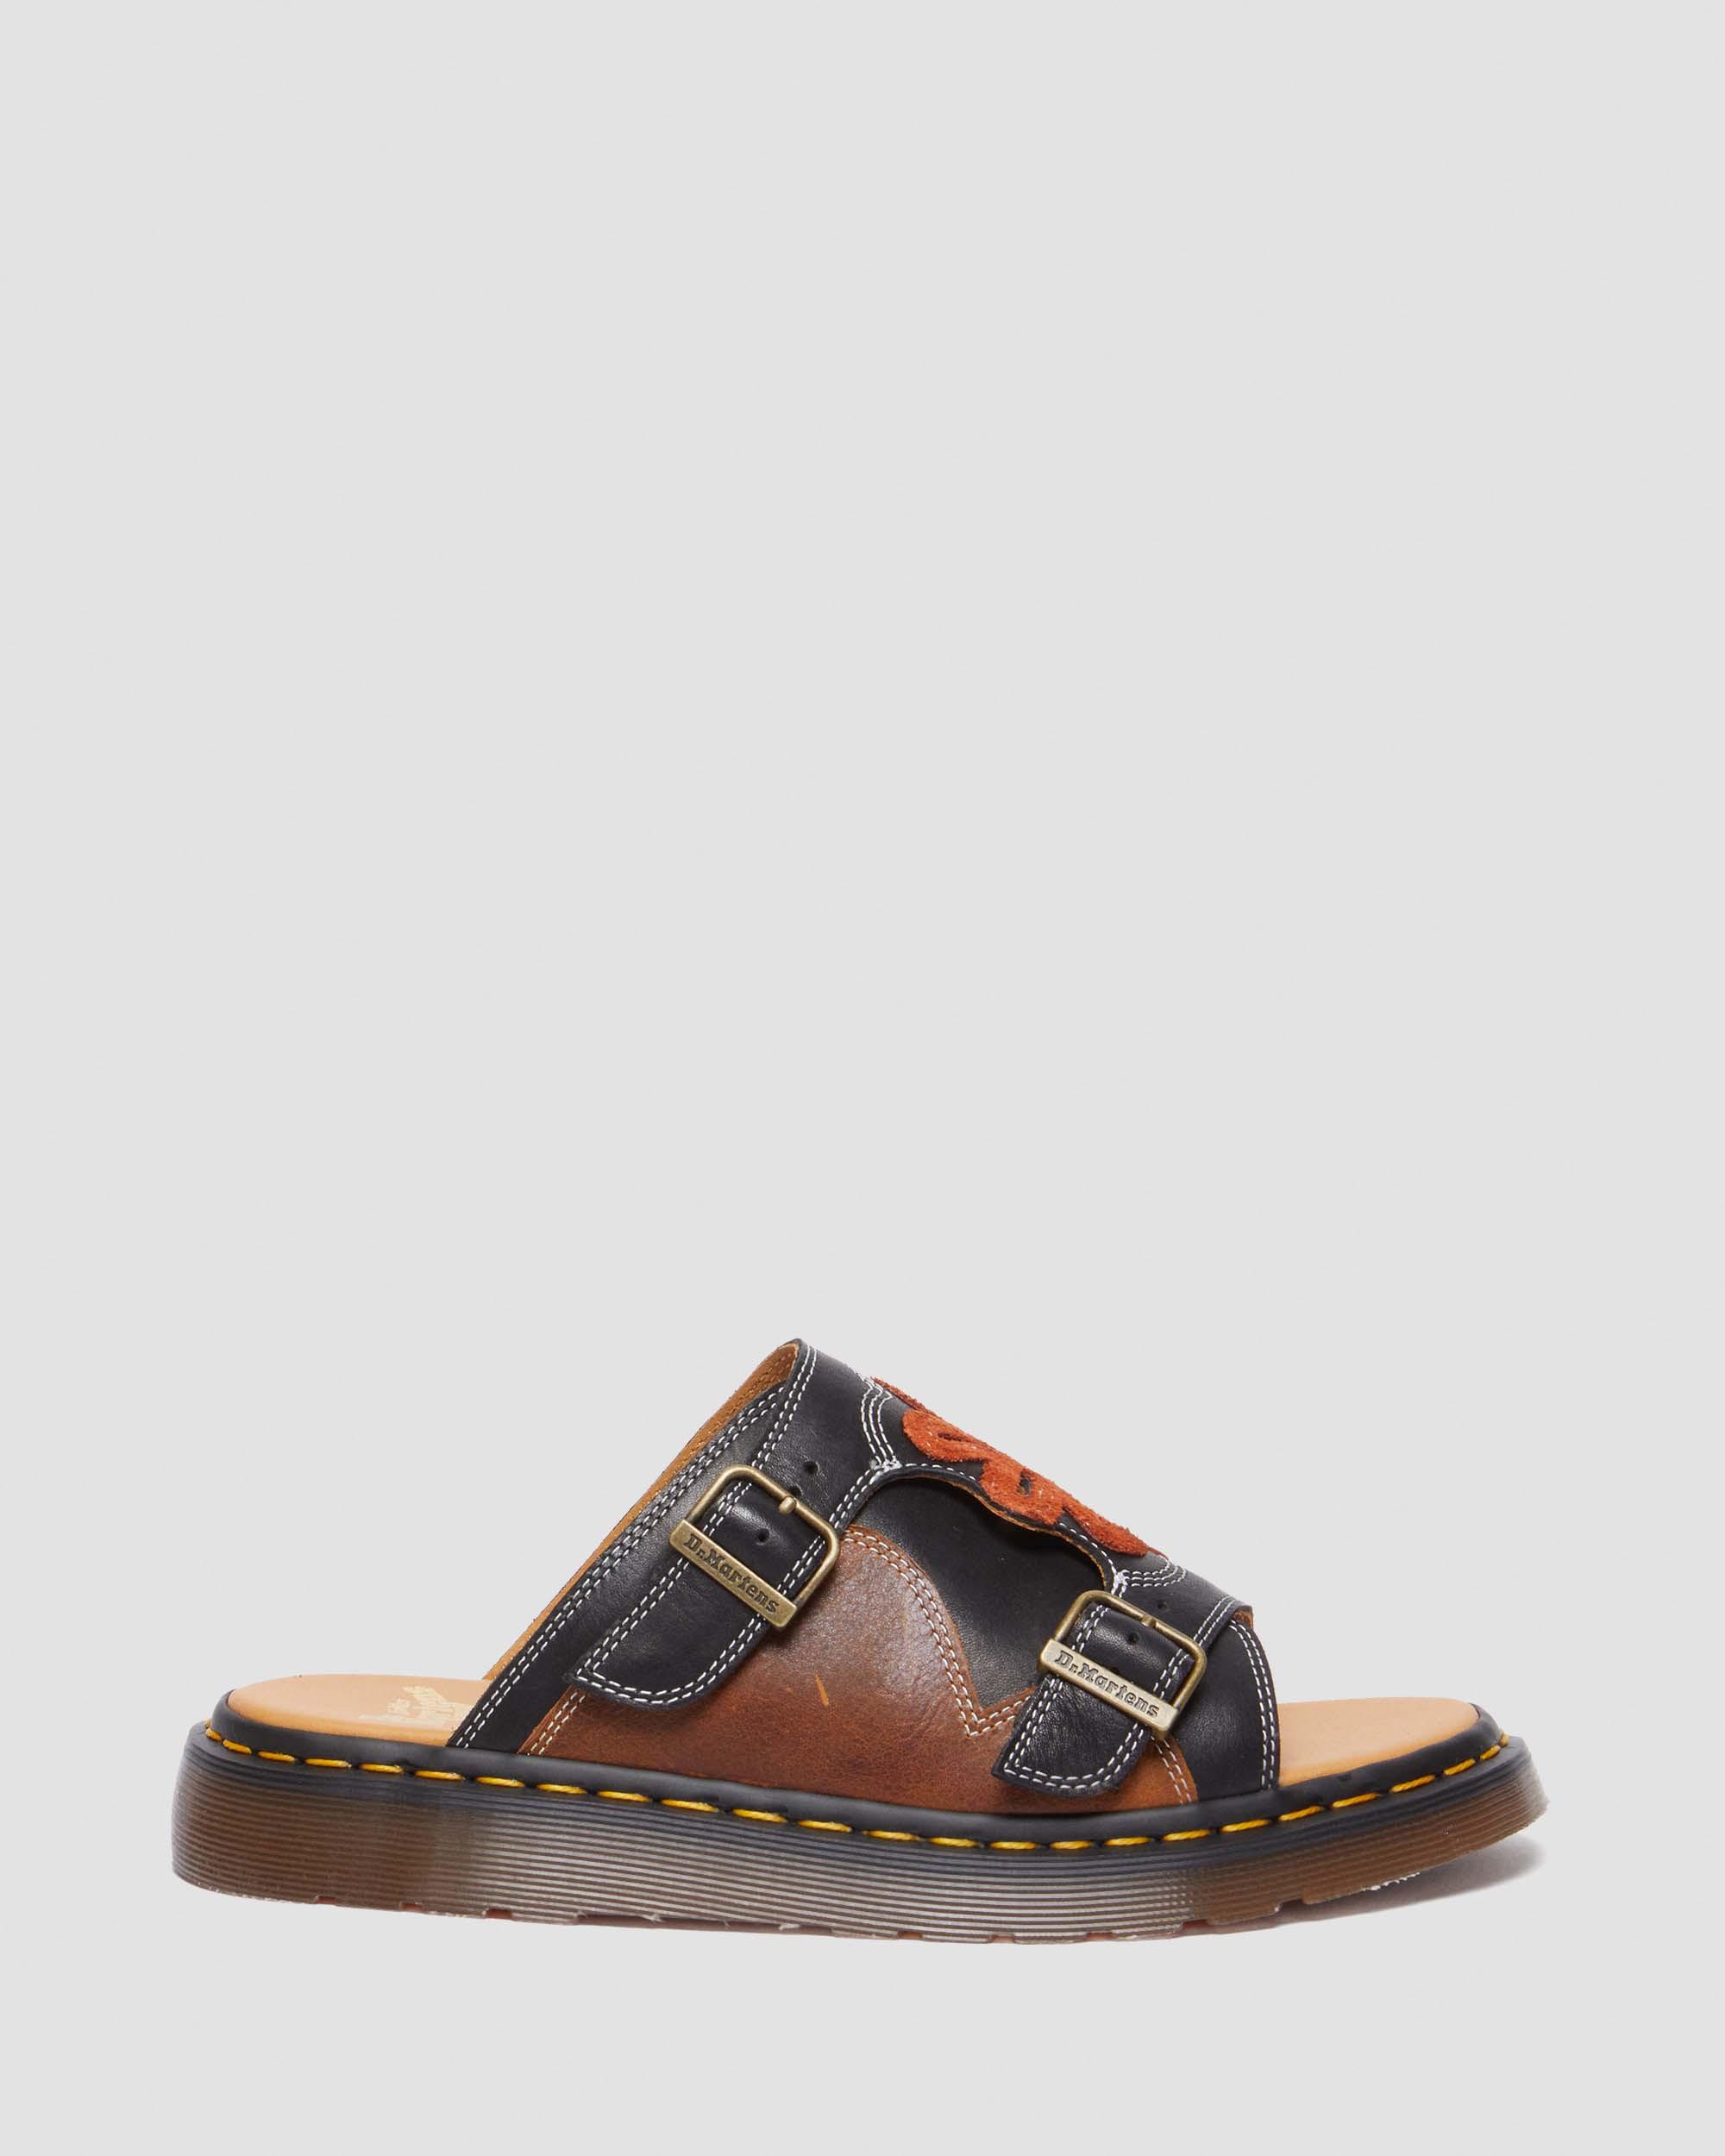 Dayne Made in England Leather & Suede Applique Slide Sandals in Black+Brown+Rust Orange